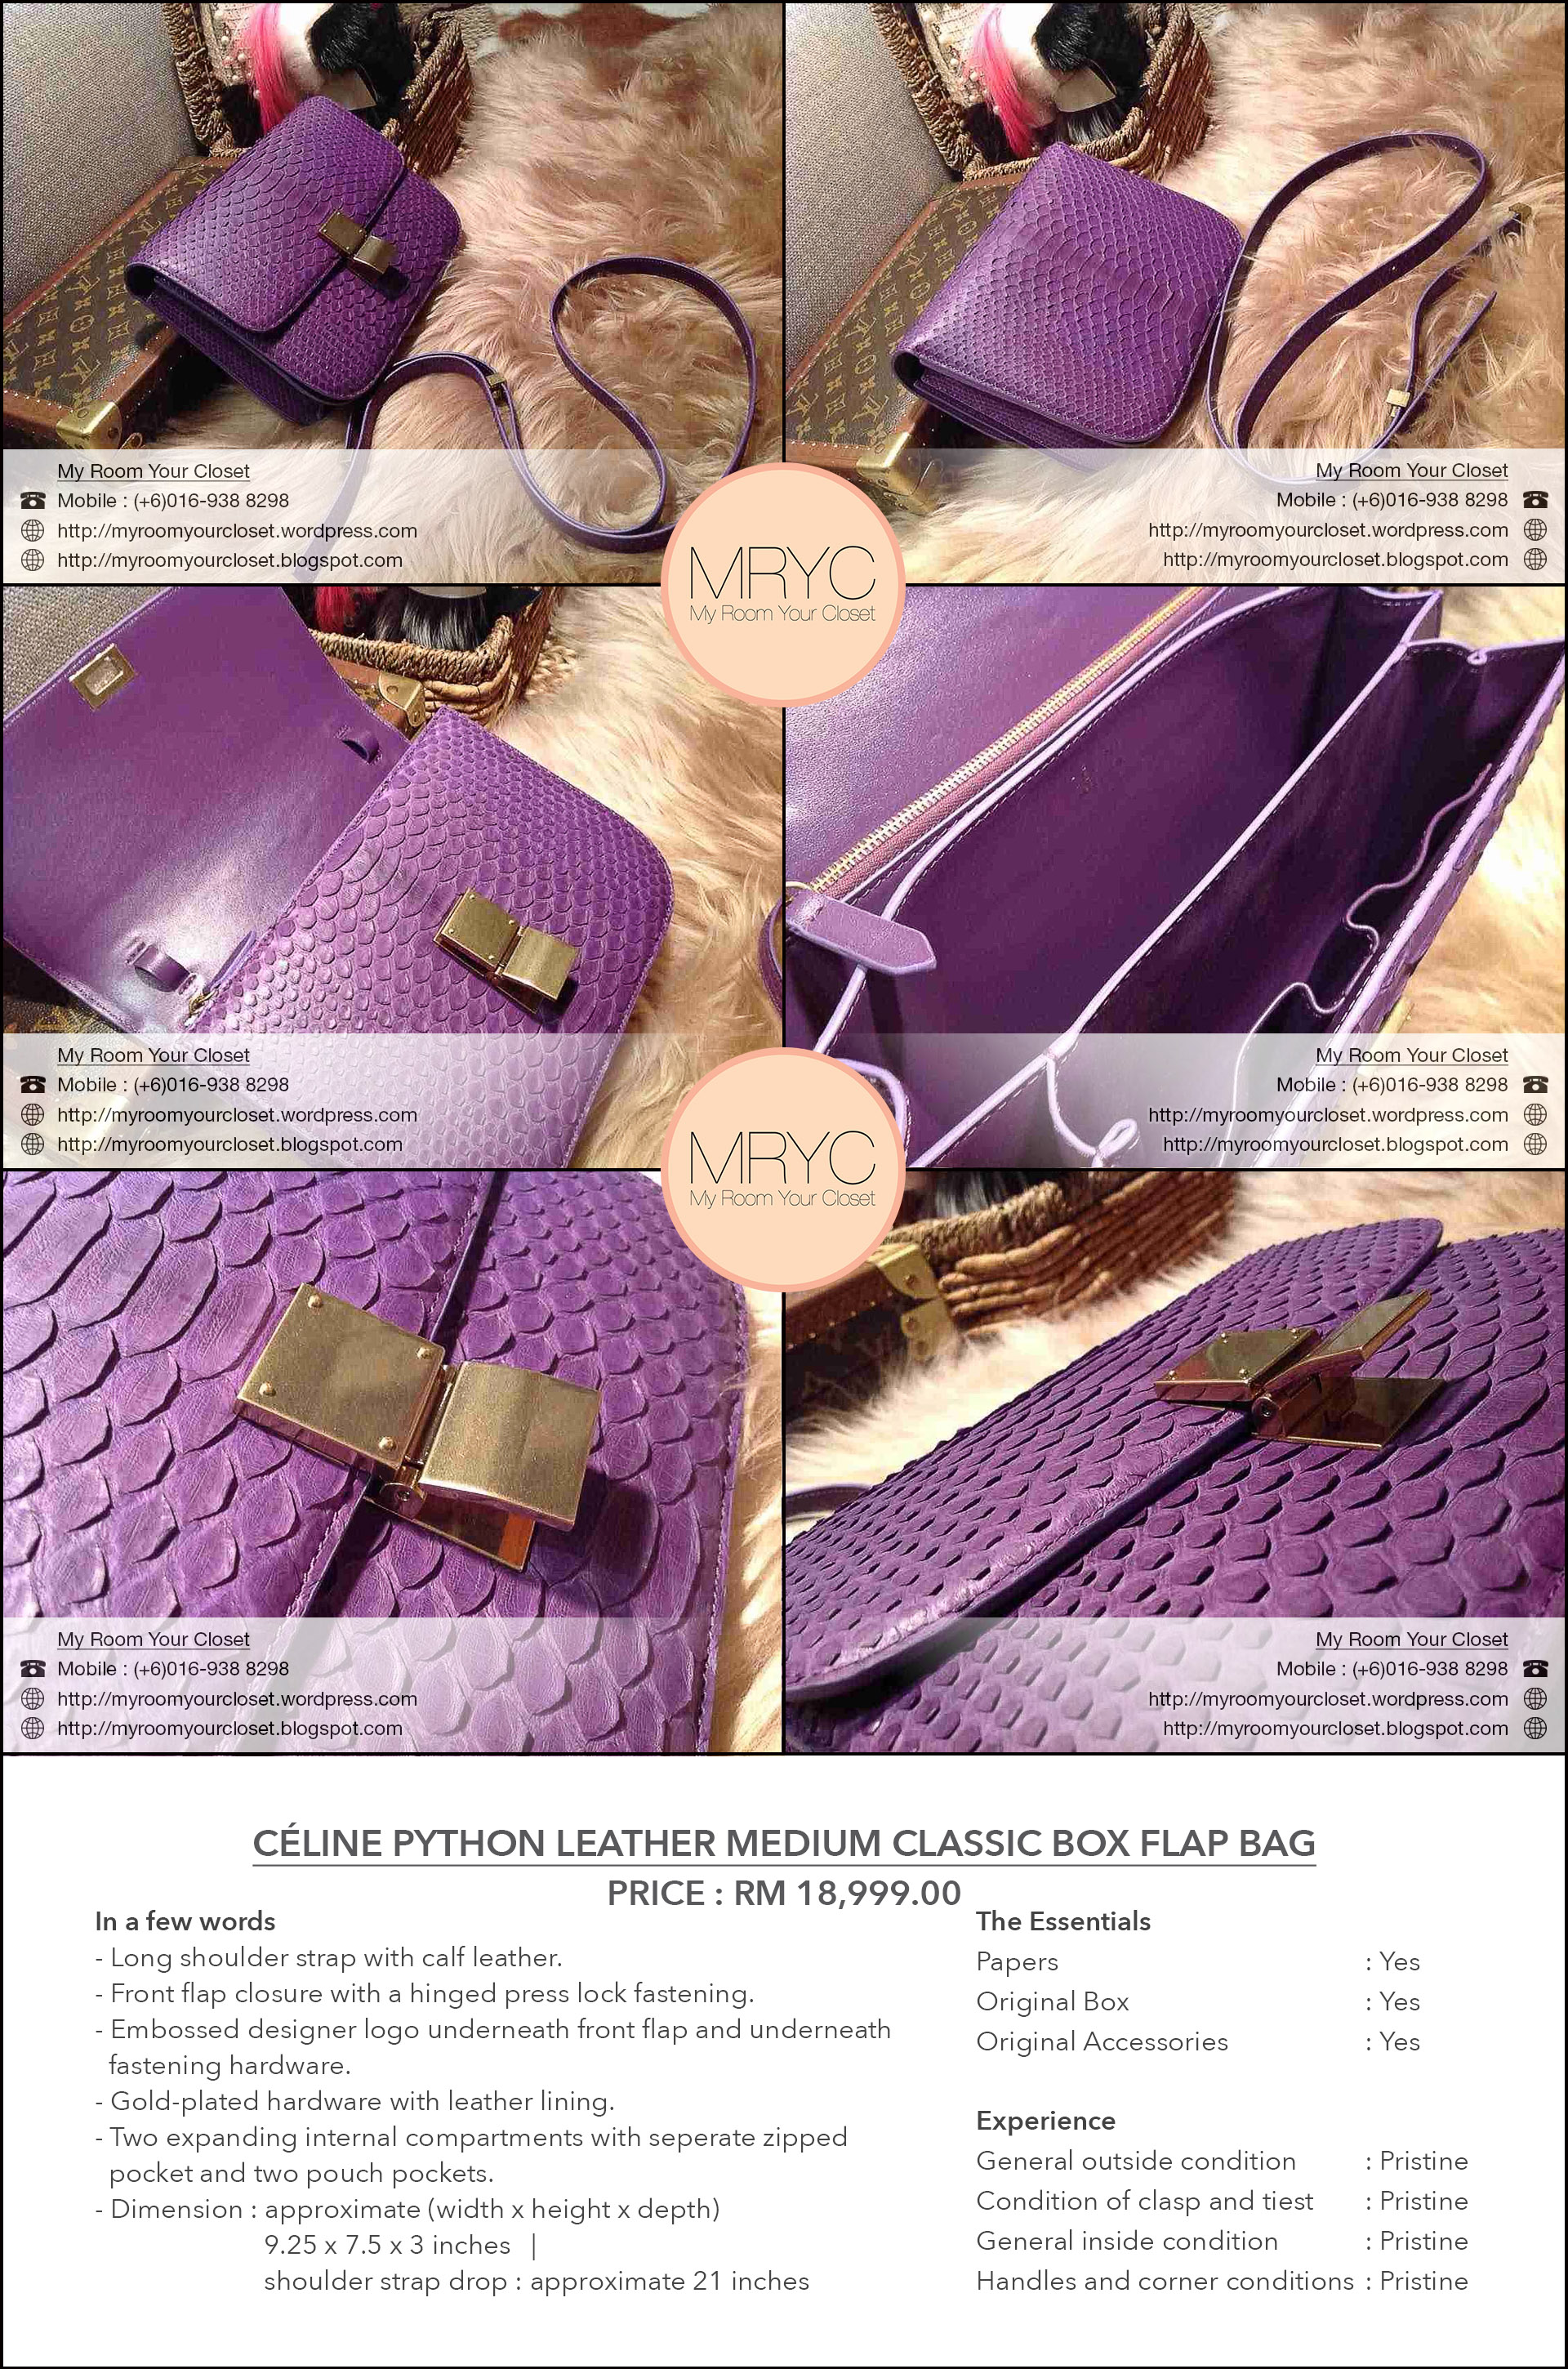 cc3a9line-python-leather-medium-classic-box-flap-bag1.jpg  